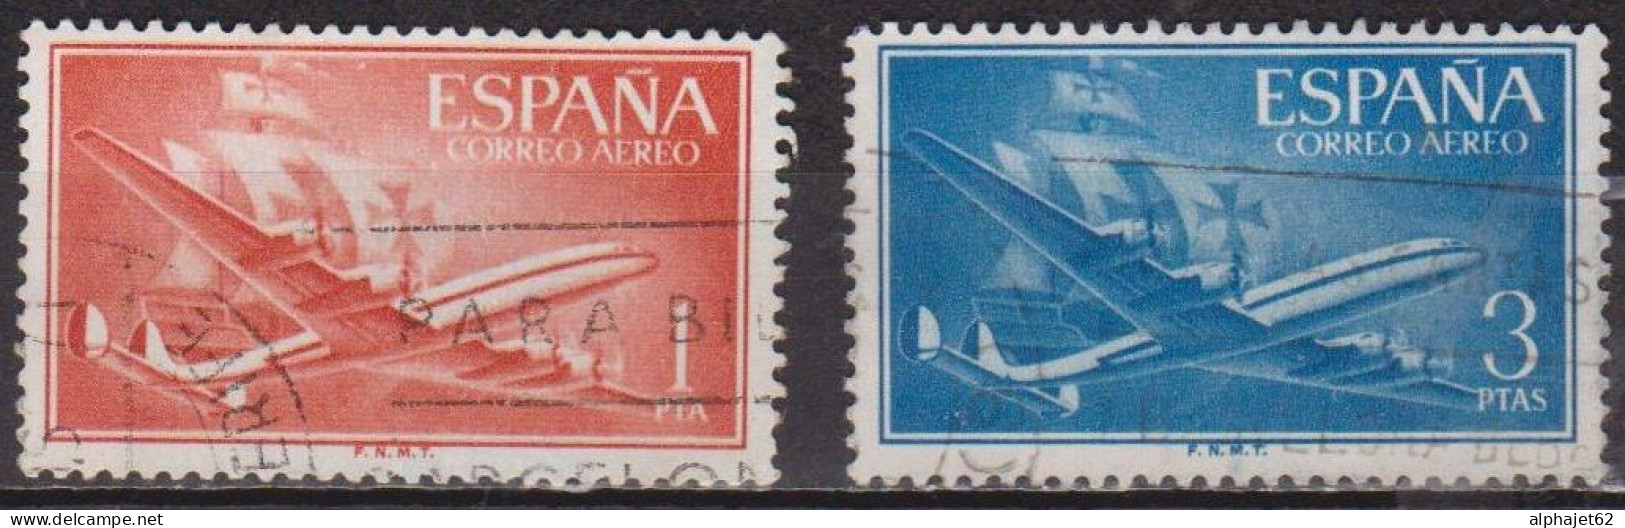 Caravelle De Colomb - ESPAGNE - Avion Superconstellation - N° 269-272 - 1955 - Used Stamps